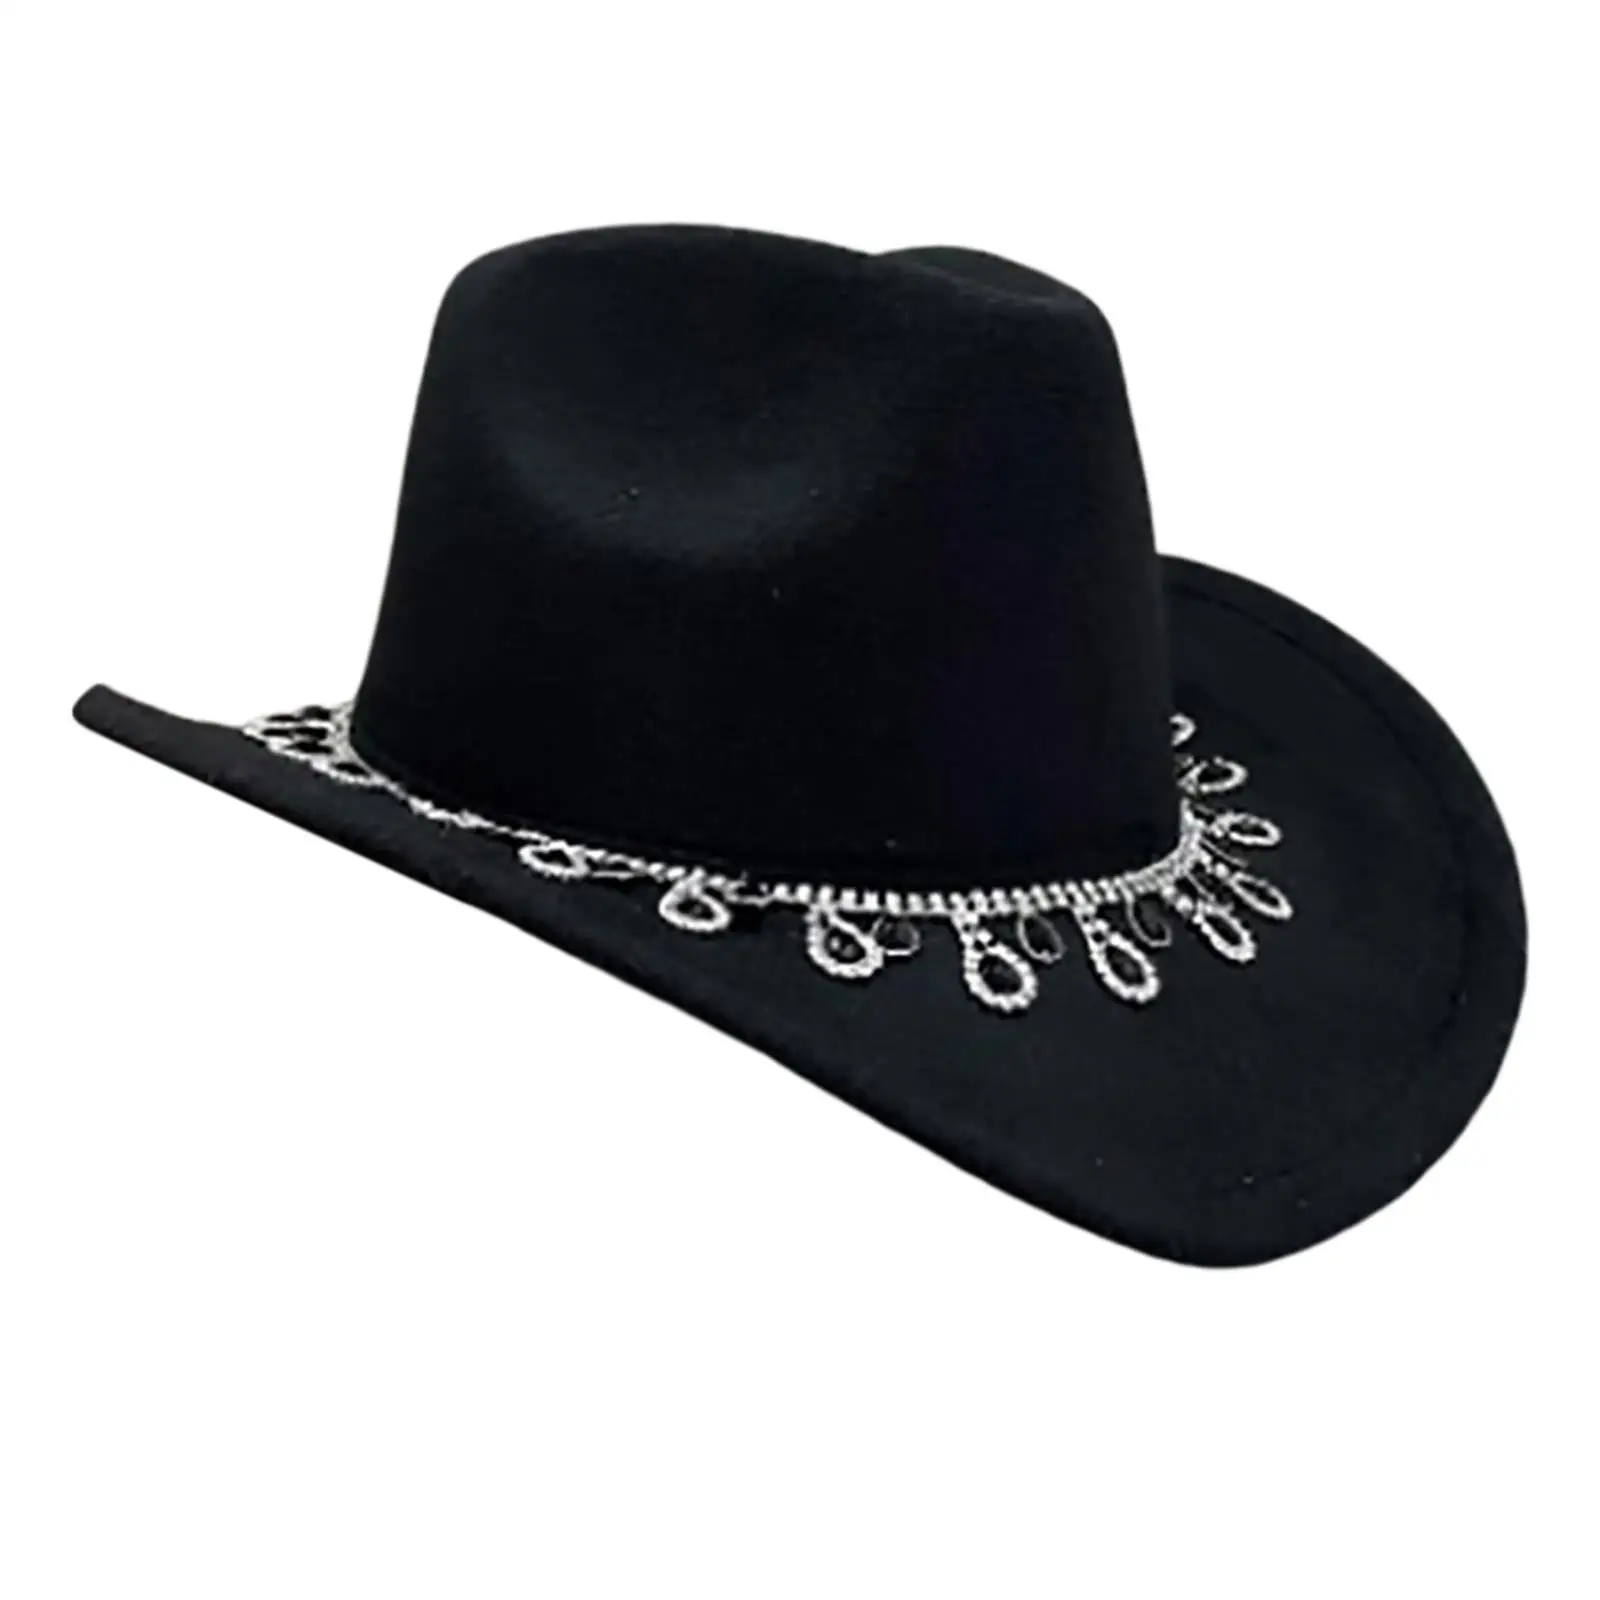 Classic Western Cowboy Hat Big Brim Photo Props Costume Cosplay for Women Men Adults Fancy Dress Holiday Fishing